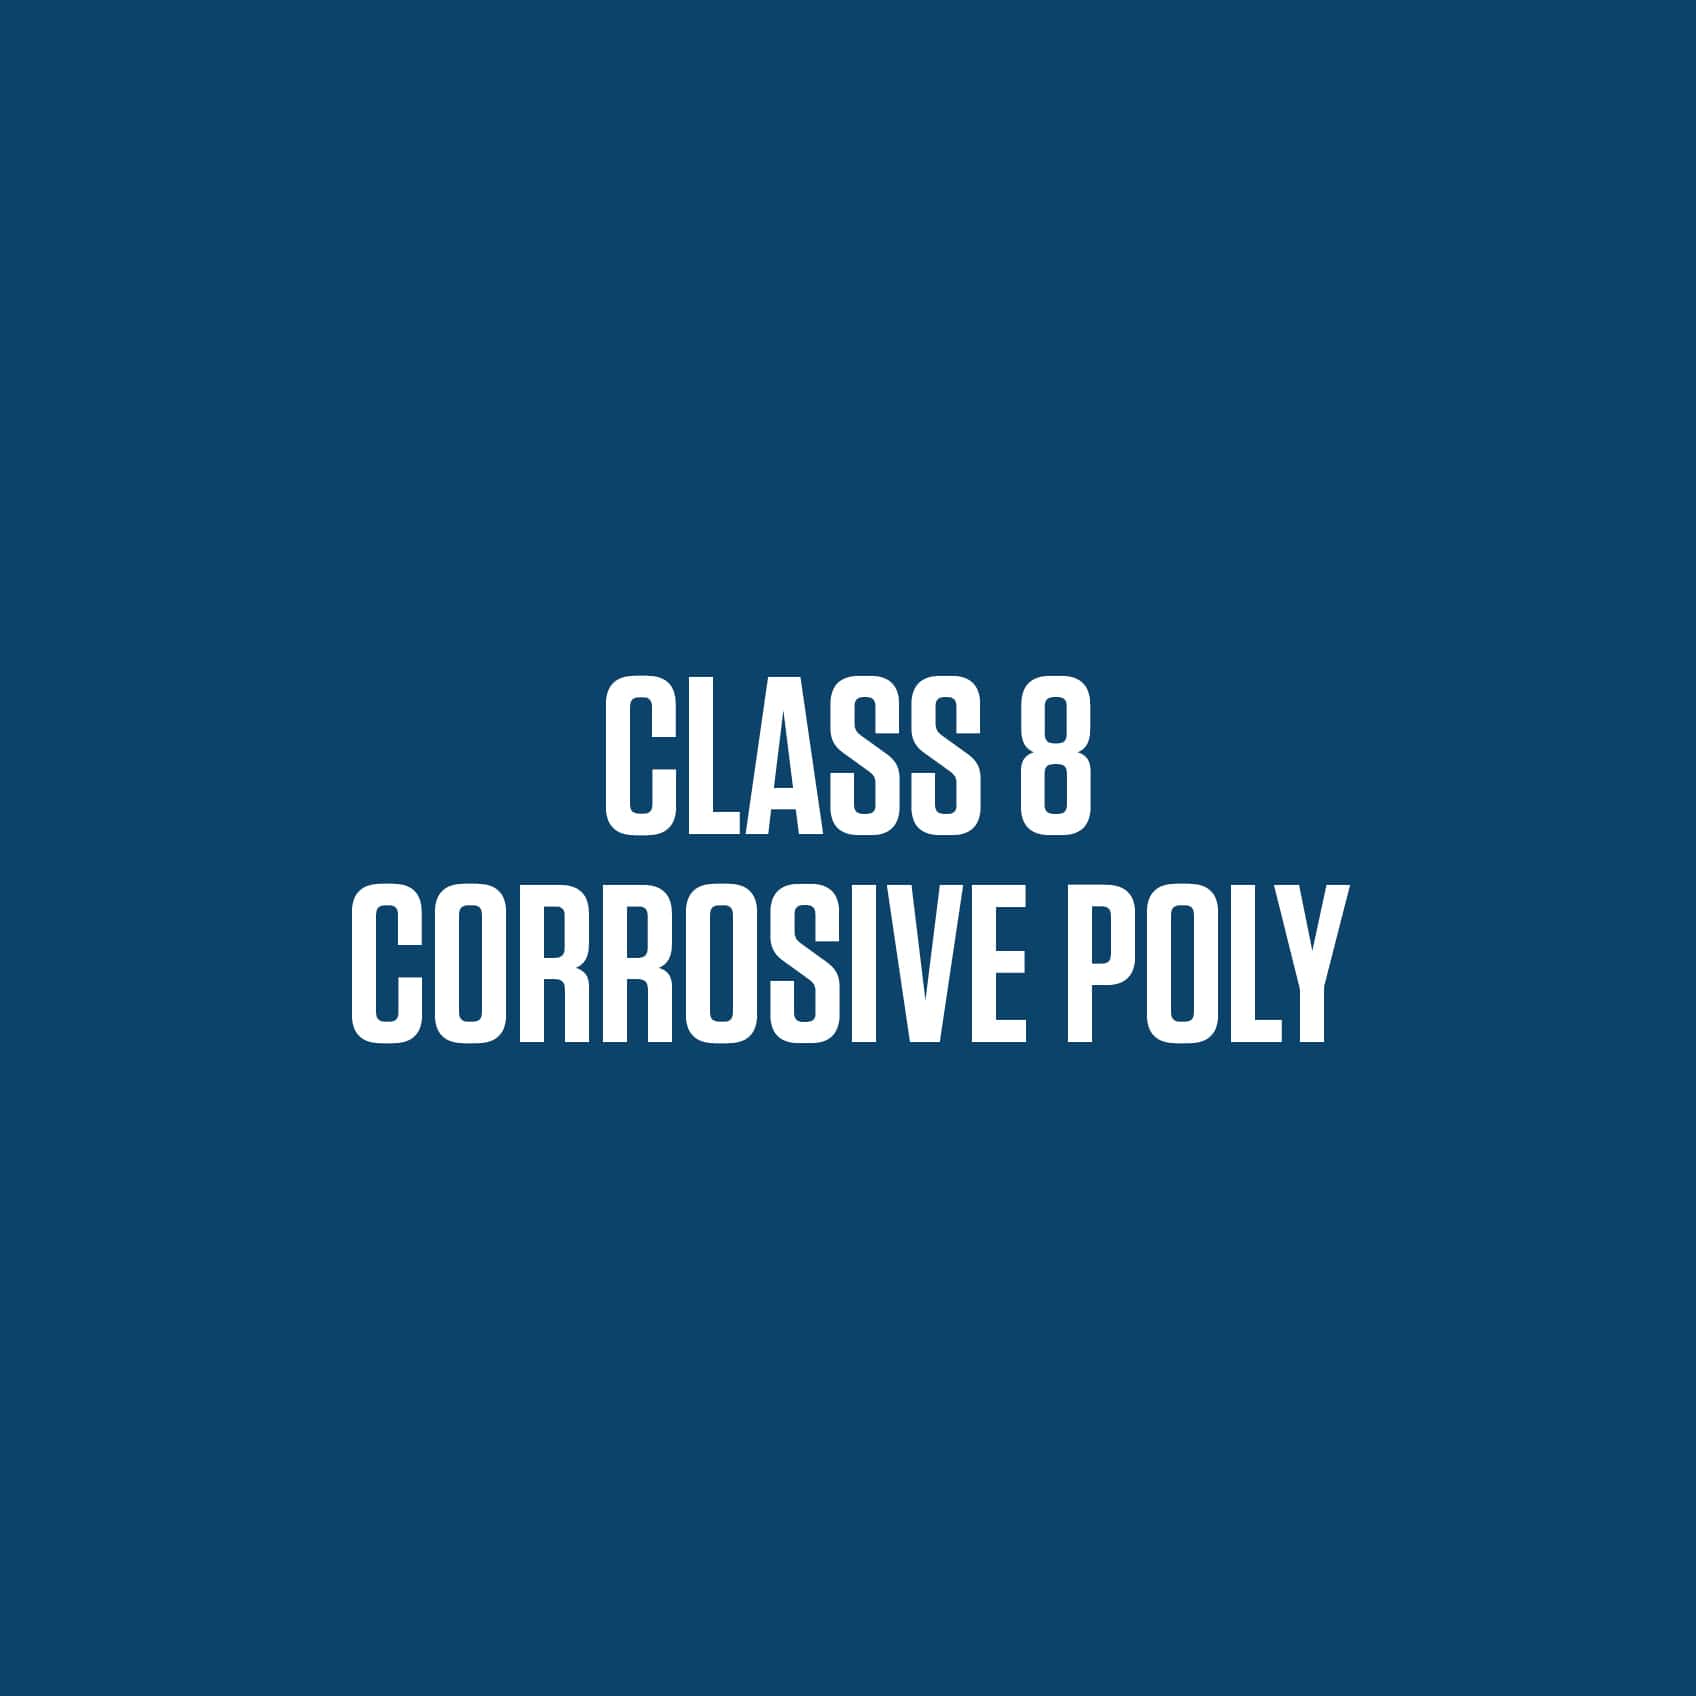 Class 8 Corrosive Poly